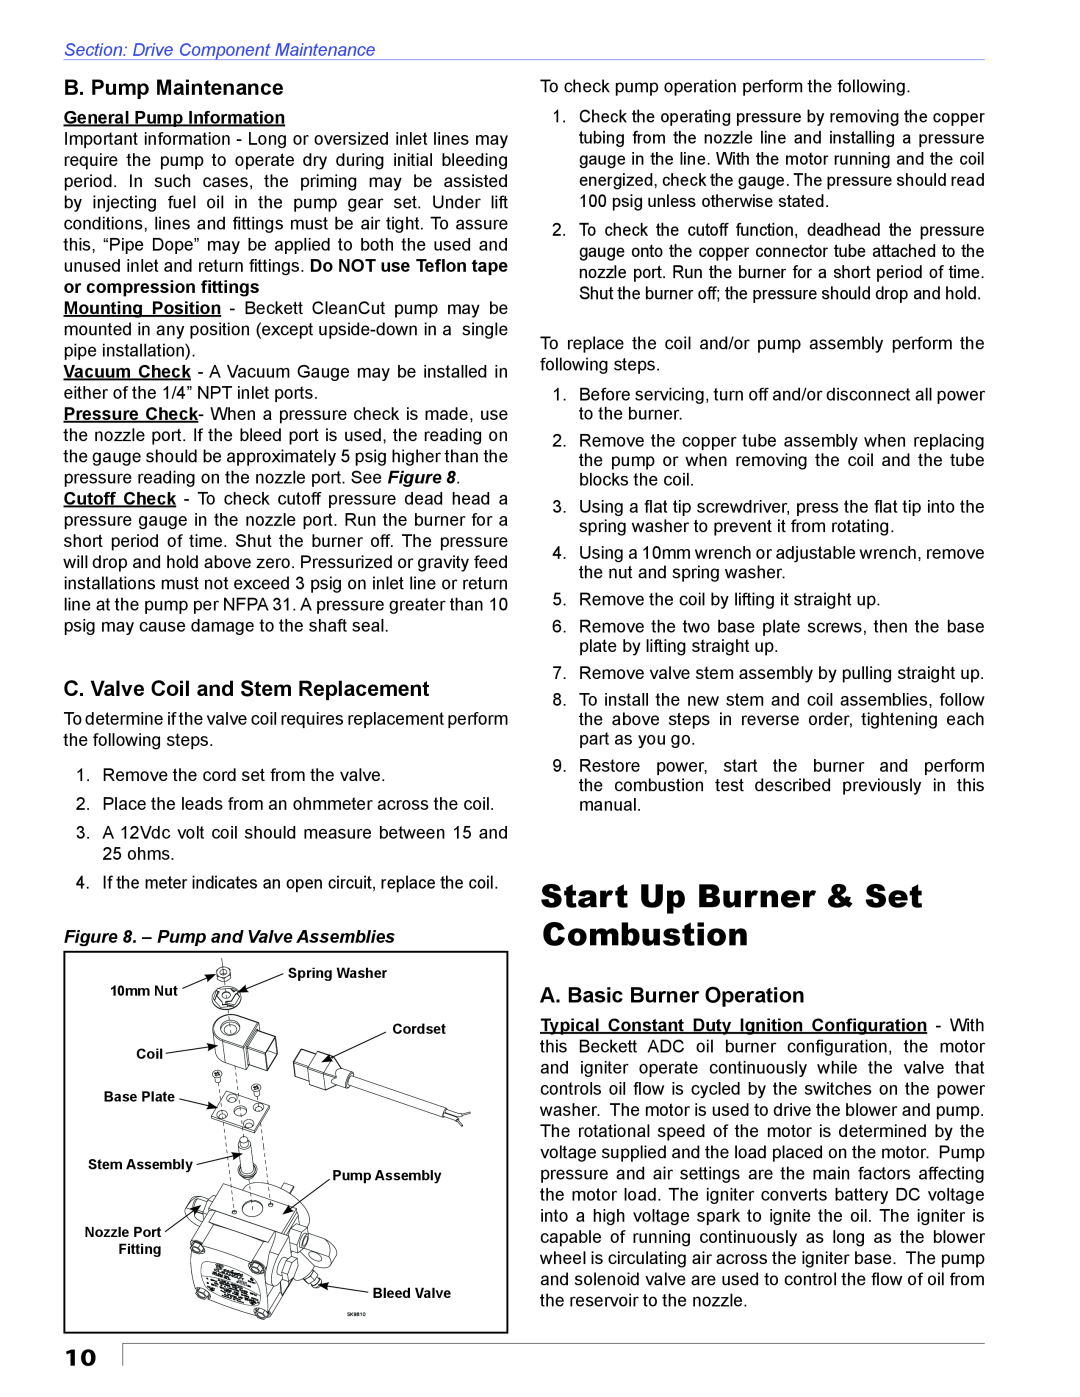 Beckett ADC manual Start Up Burner & Set Combustion, B. Pump Maintenance, C. Valve Coil and Stem Replacement 